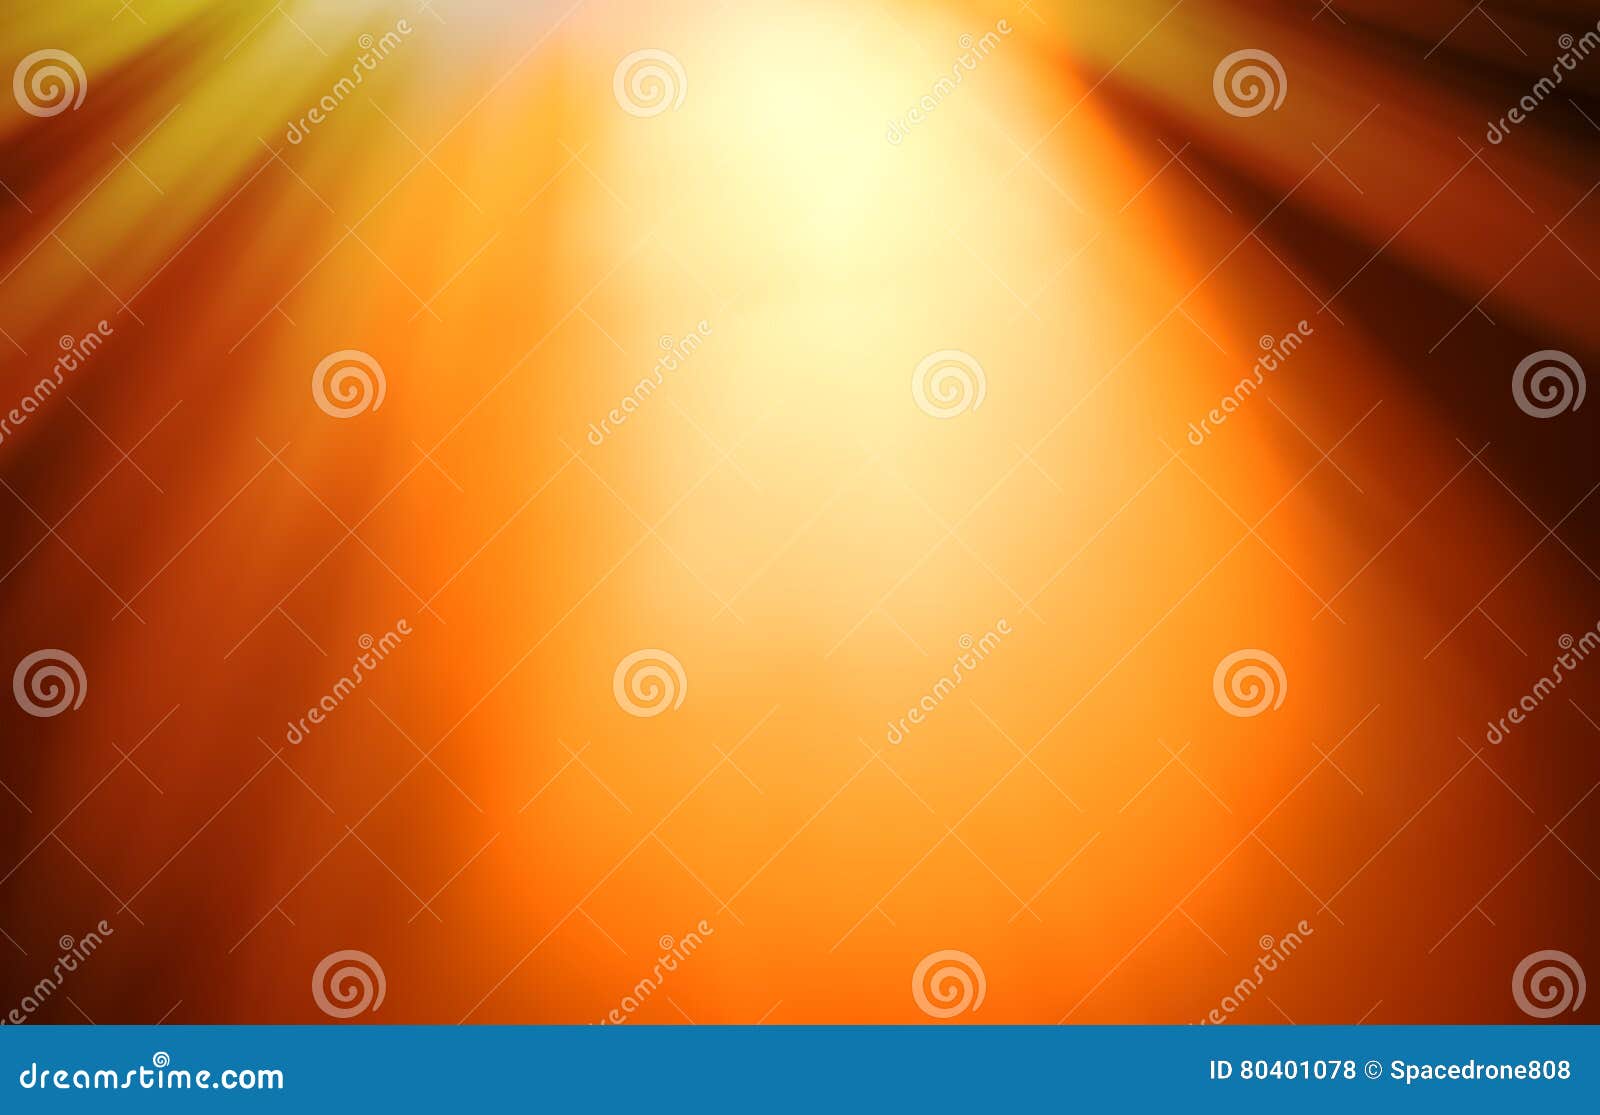 Top Orange Ray of Light Bokeh Background Stock Photo - Image of object,  glow: 80401078